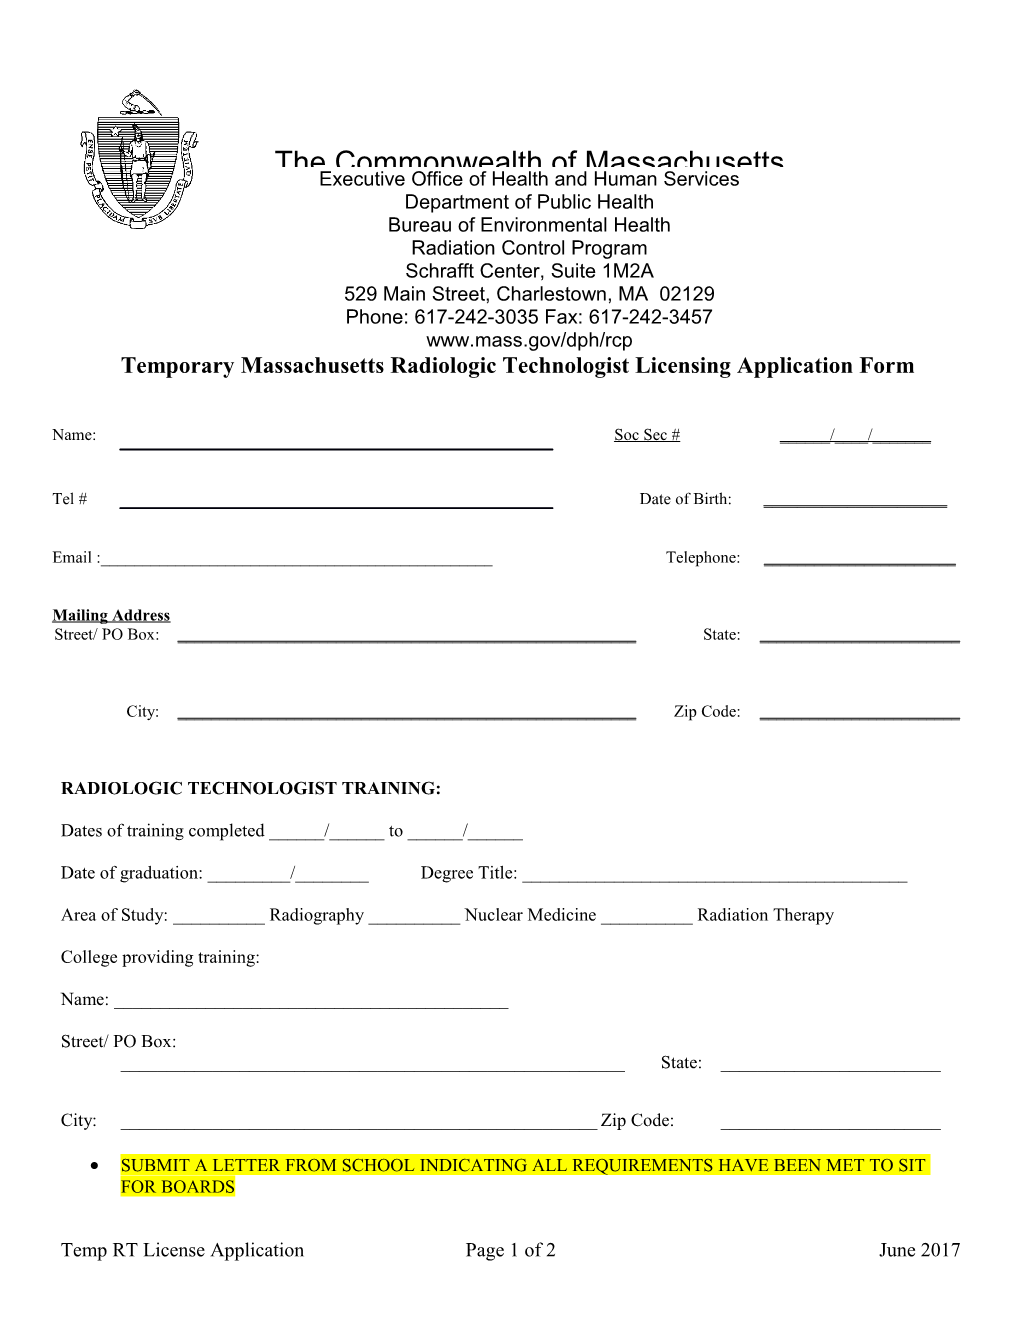 MDPH - Massachusetts Radiologic Technologist Licensing Application Form